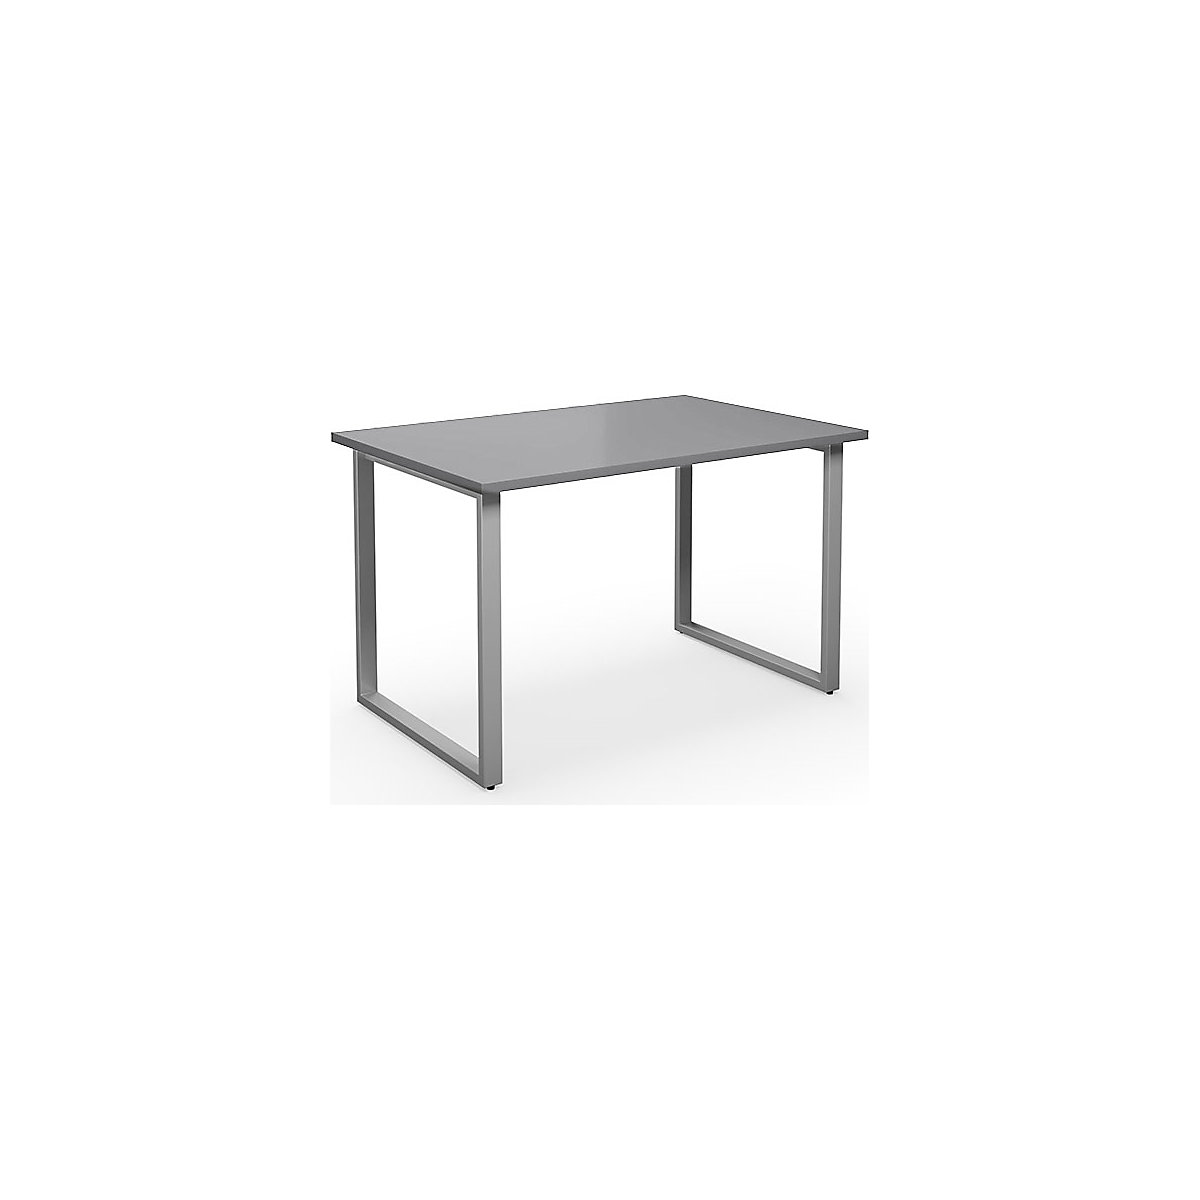 DUO-O multi-purpose desk, straight tabletop, WxD 1200 x 800 mm, light grey, silver-11